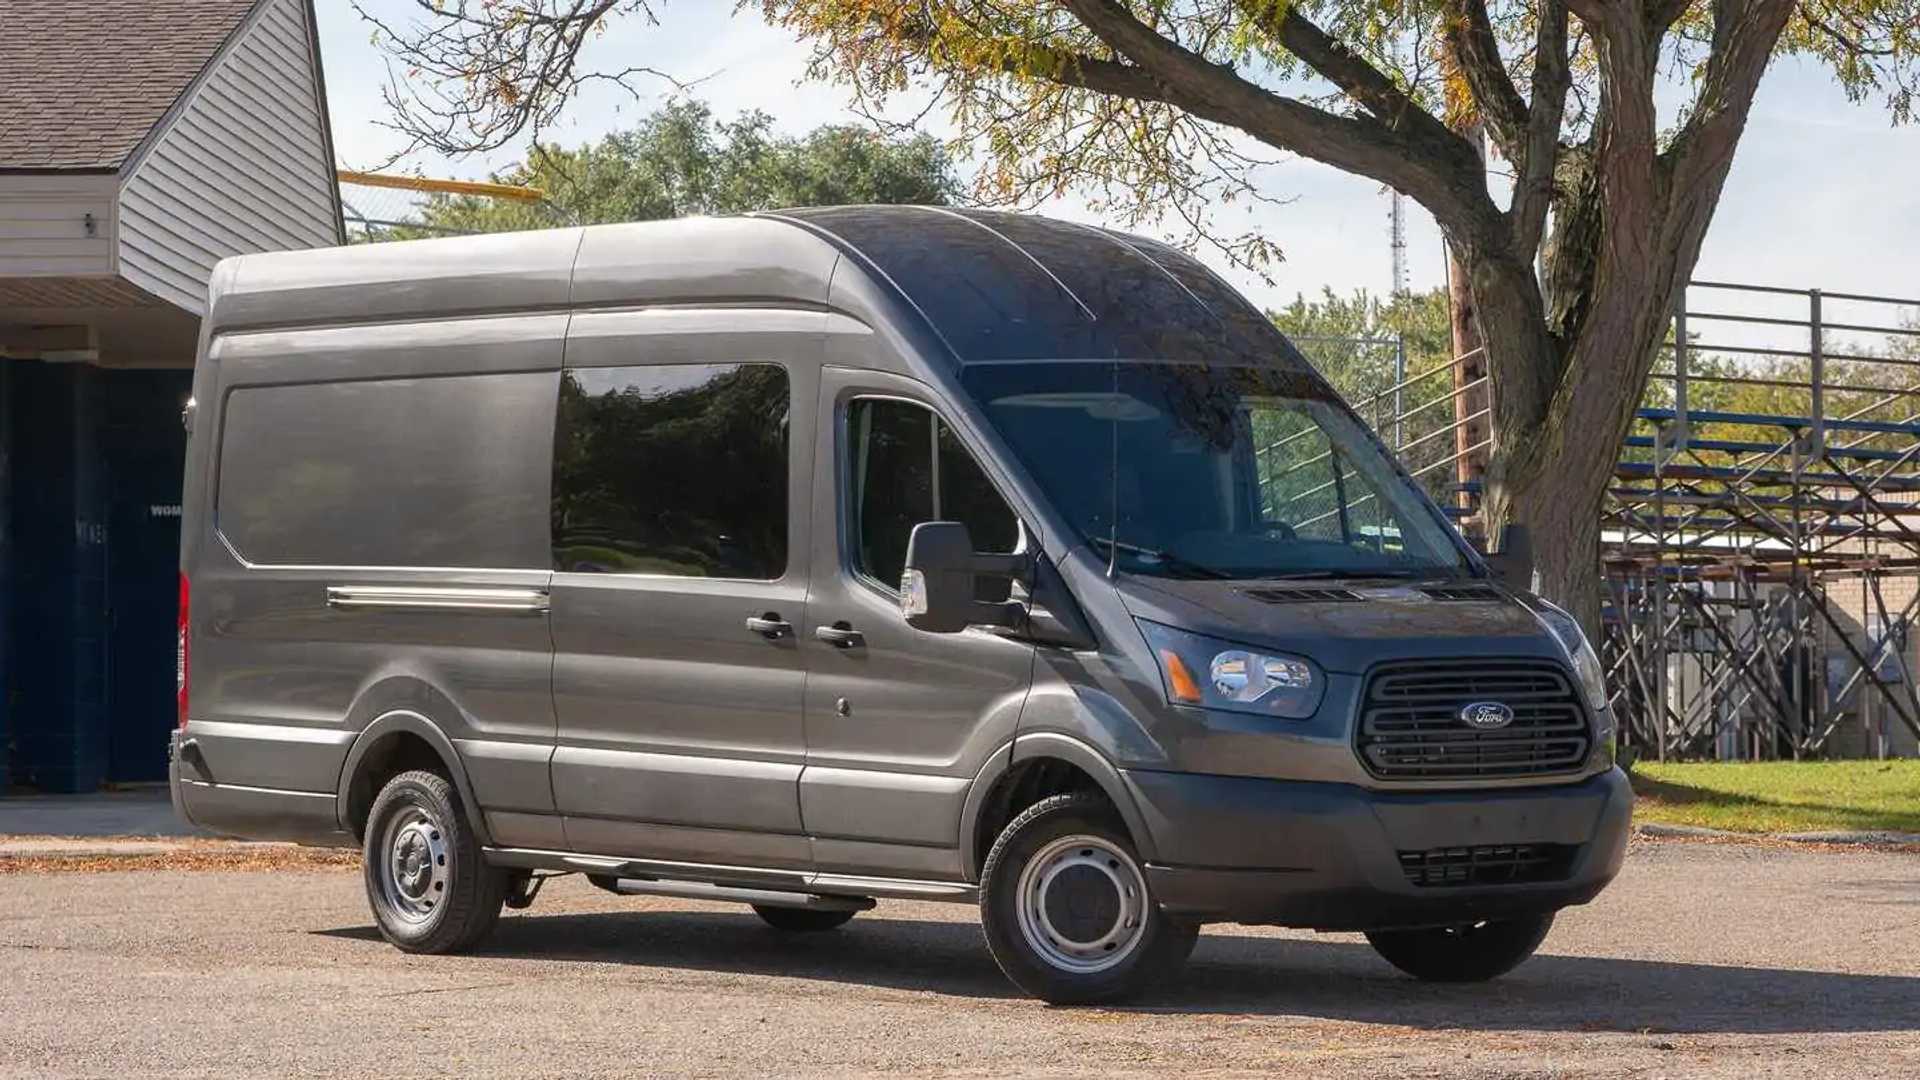 2018 Ford Transit 250HR Cargo Van Review: A Big, Fat Focus